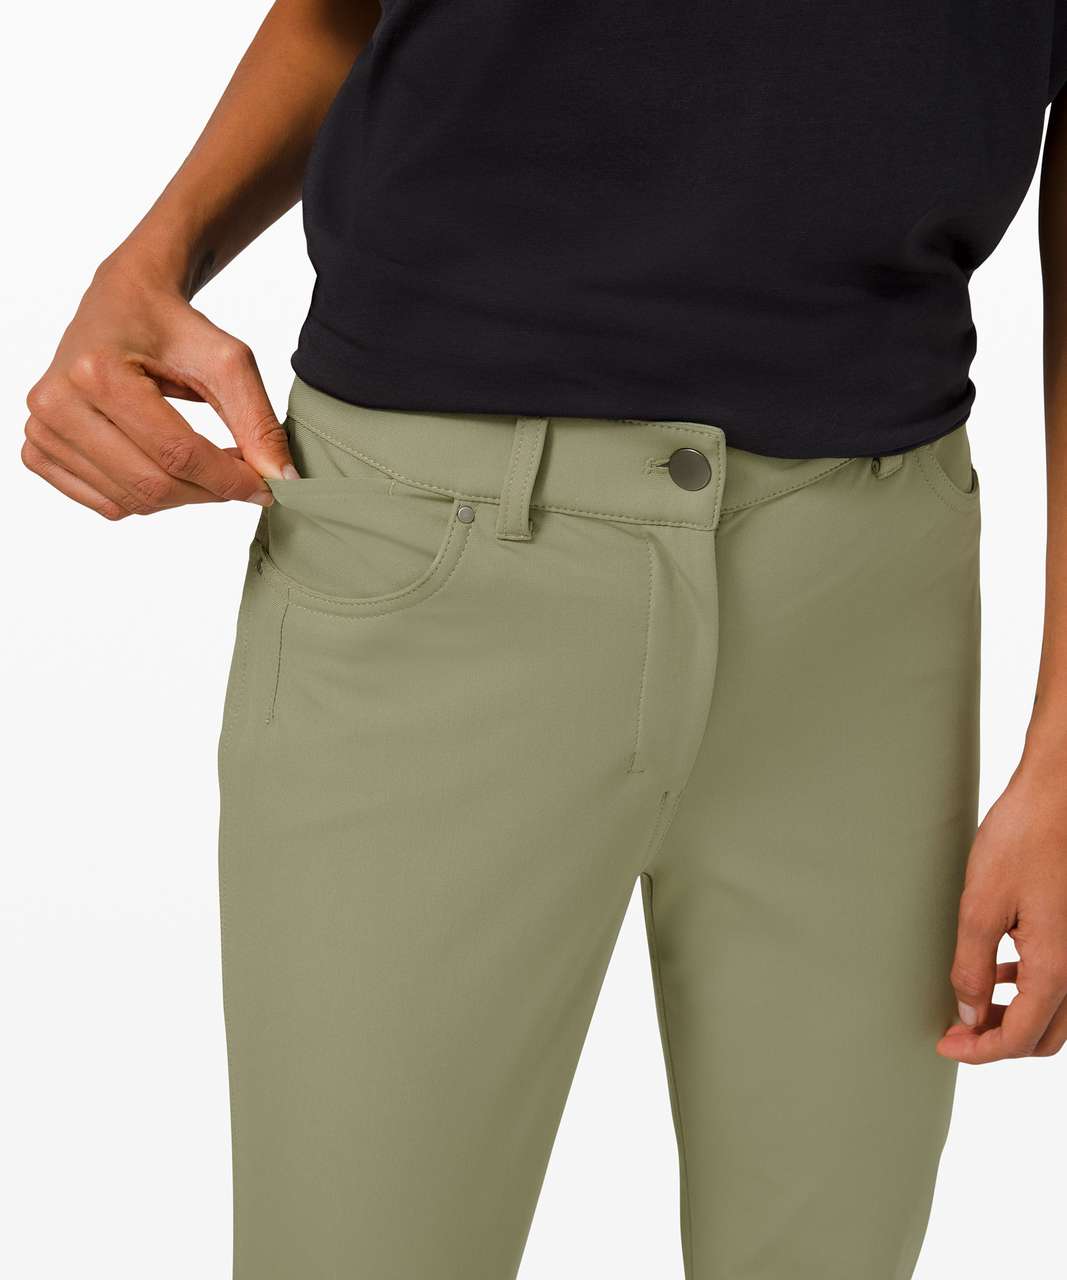 On the Belt Bag and City Sleek 5 Pocket 7/8 Pant- new fav pants!!! :  r/lululemon